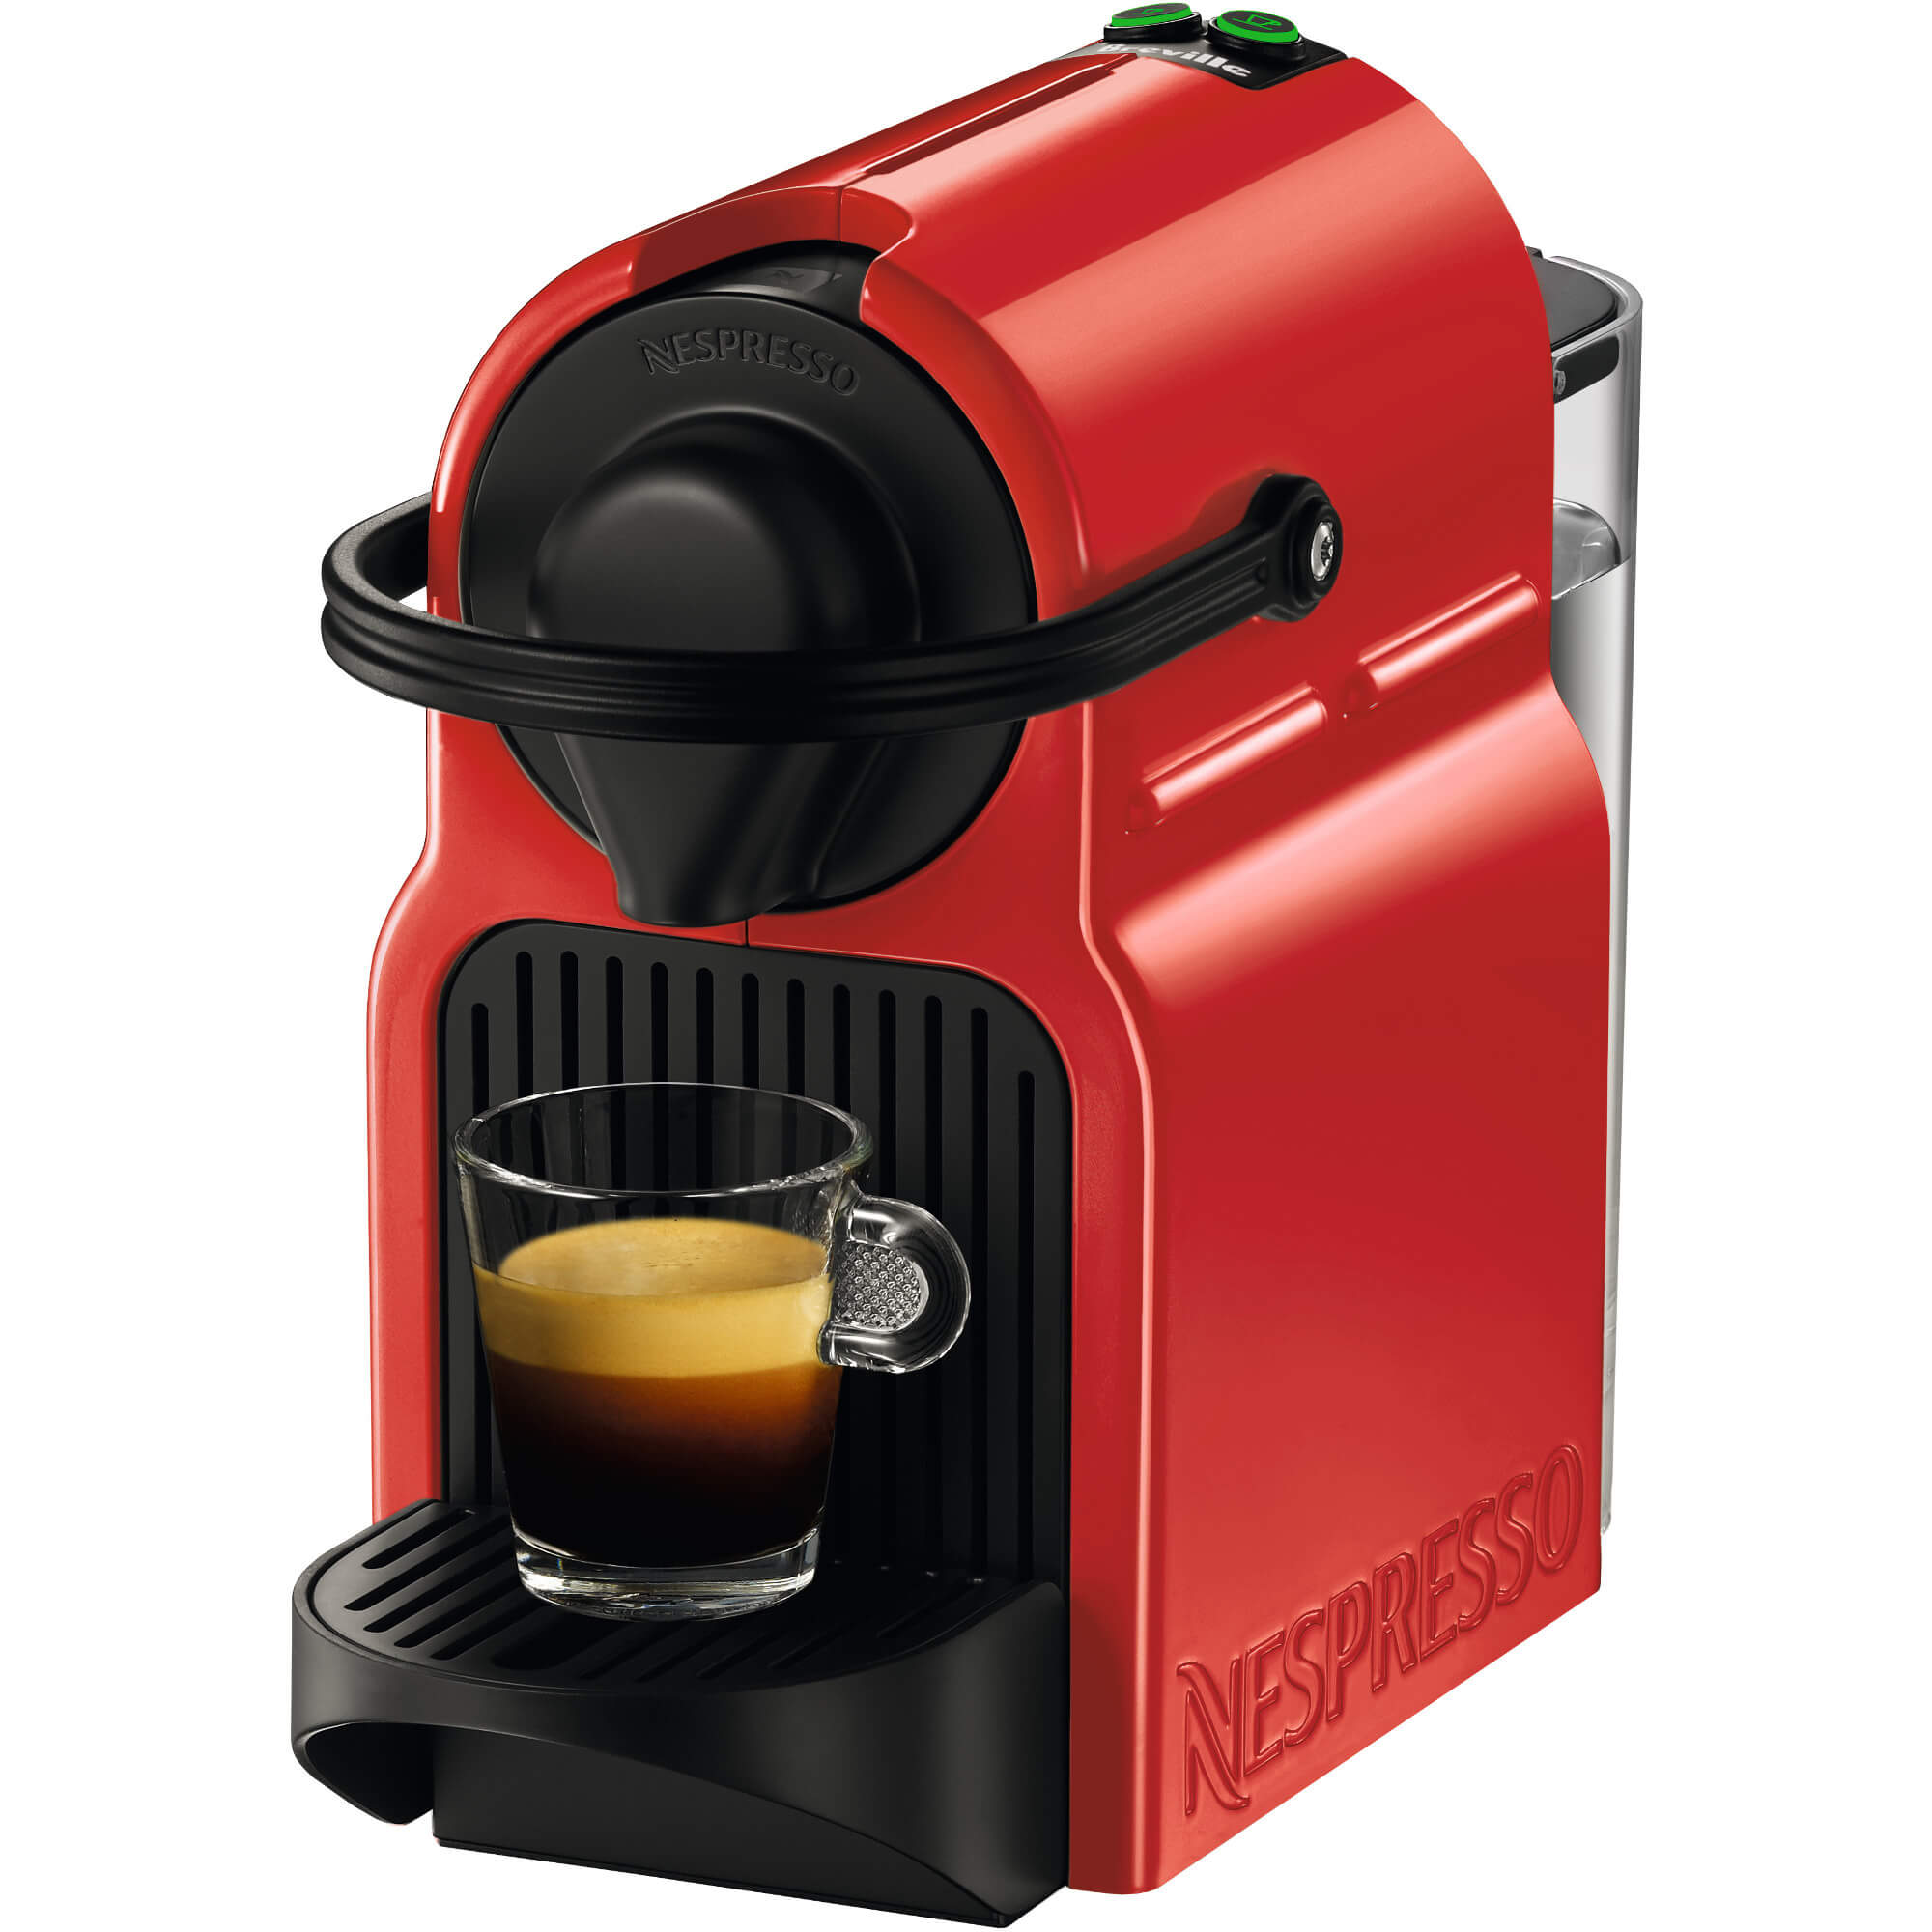  Espressor Nespresso Inissia C40, 1260 W, 0.7 L, 19 bar, Rosu 